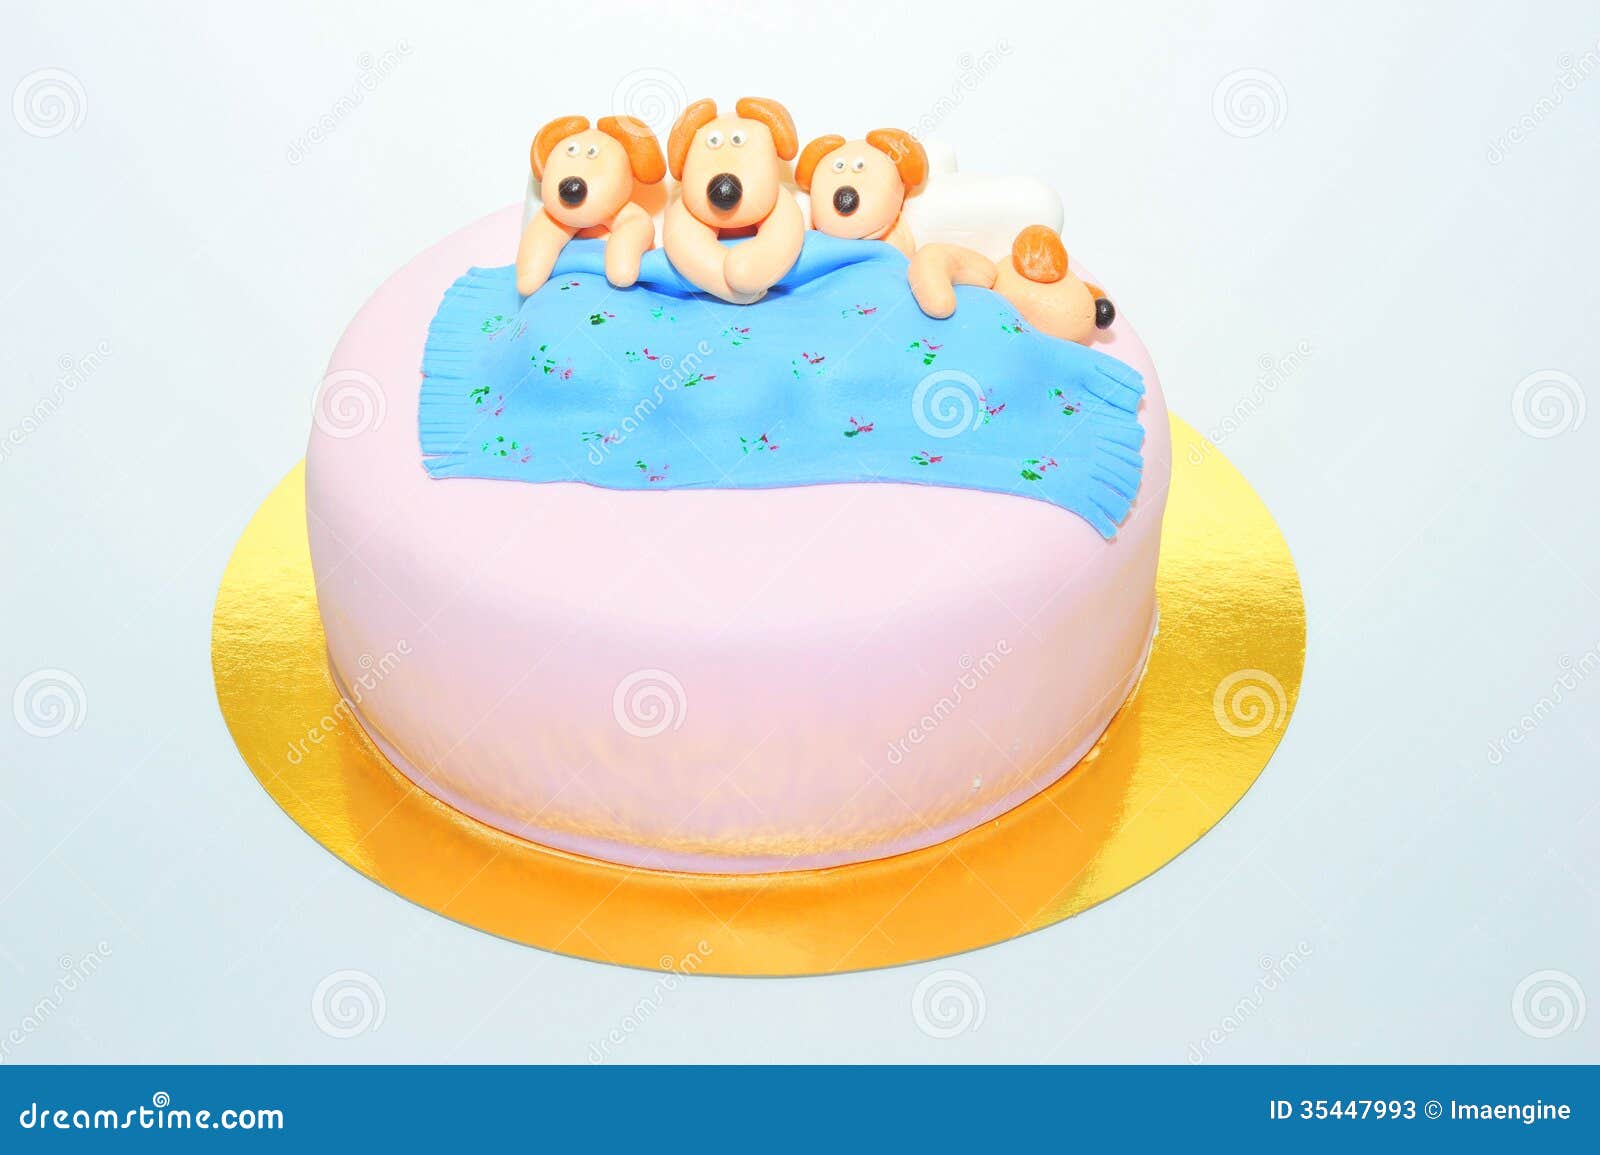 funny anniversary cakes ideas｜TikTok Search